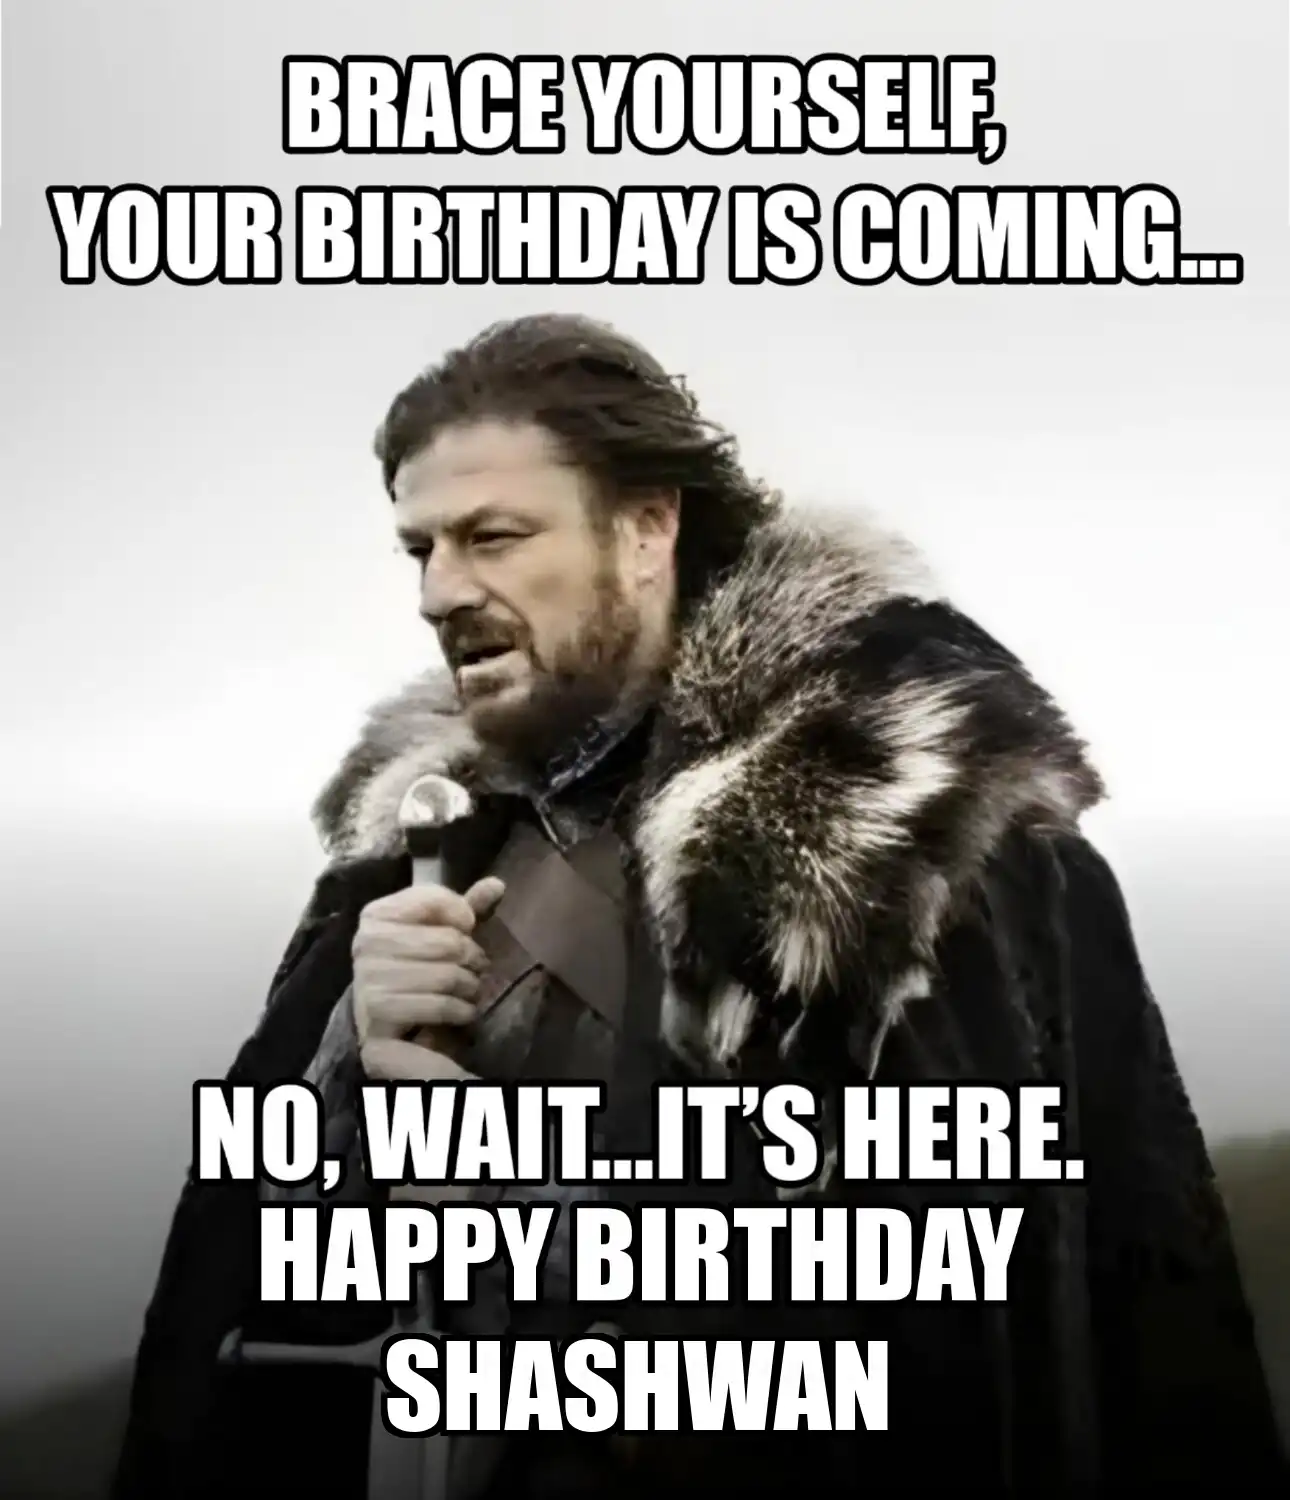 Happy Birthday Shashwan Brace Yourself Your Birthday Is Coming Meme